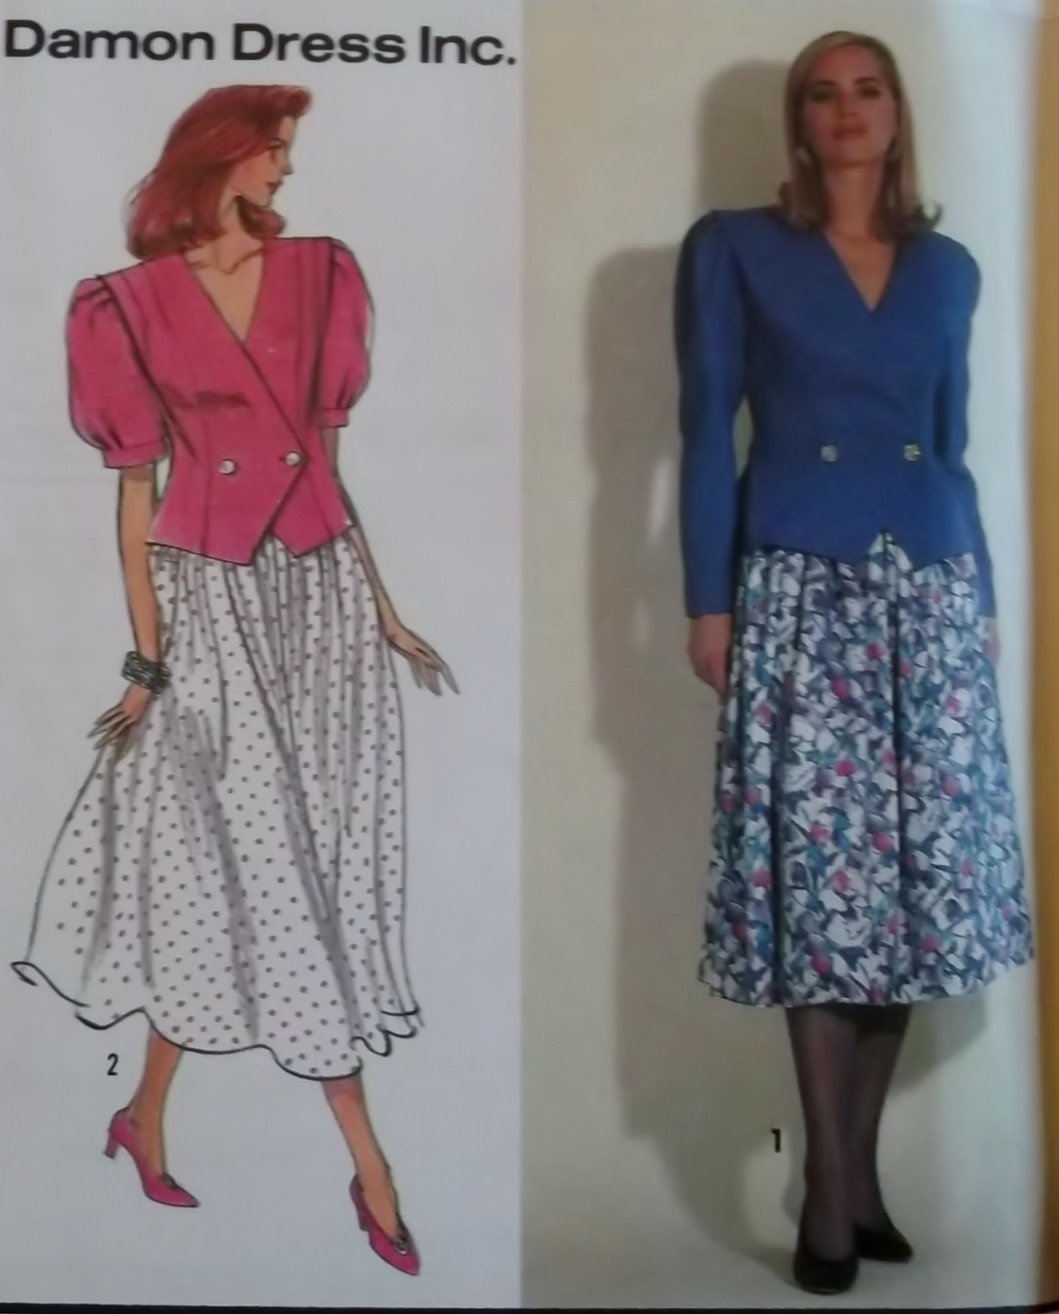 Simplicity 7369 Misses' Skirt and Blouse Pattern, Plus Sizes 10, 12, 14, 16, 18 UNCUT